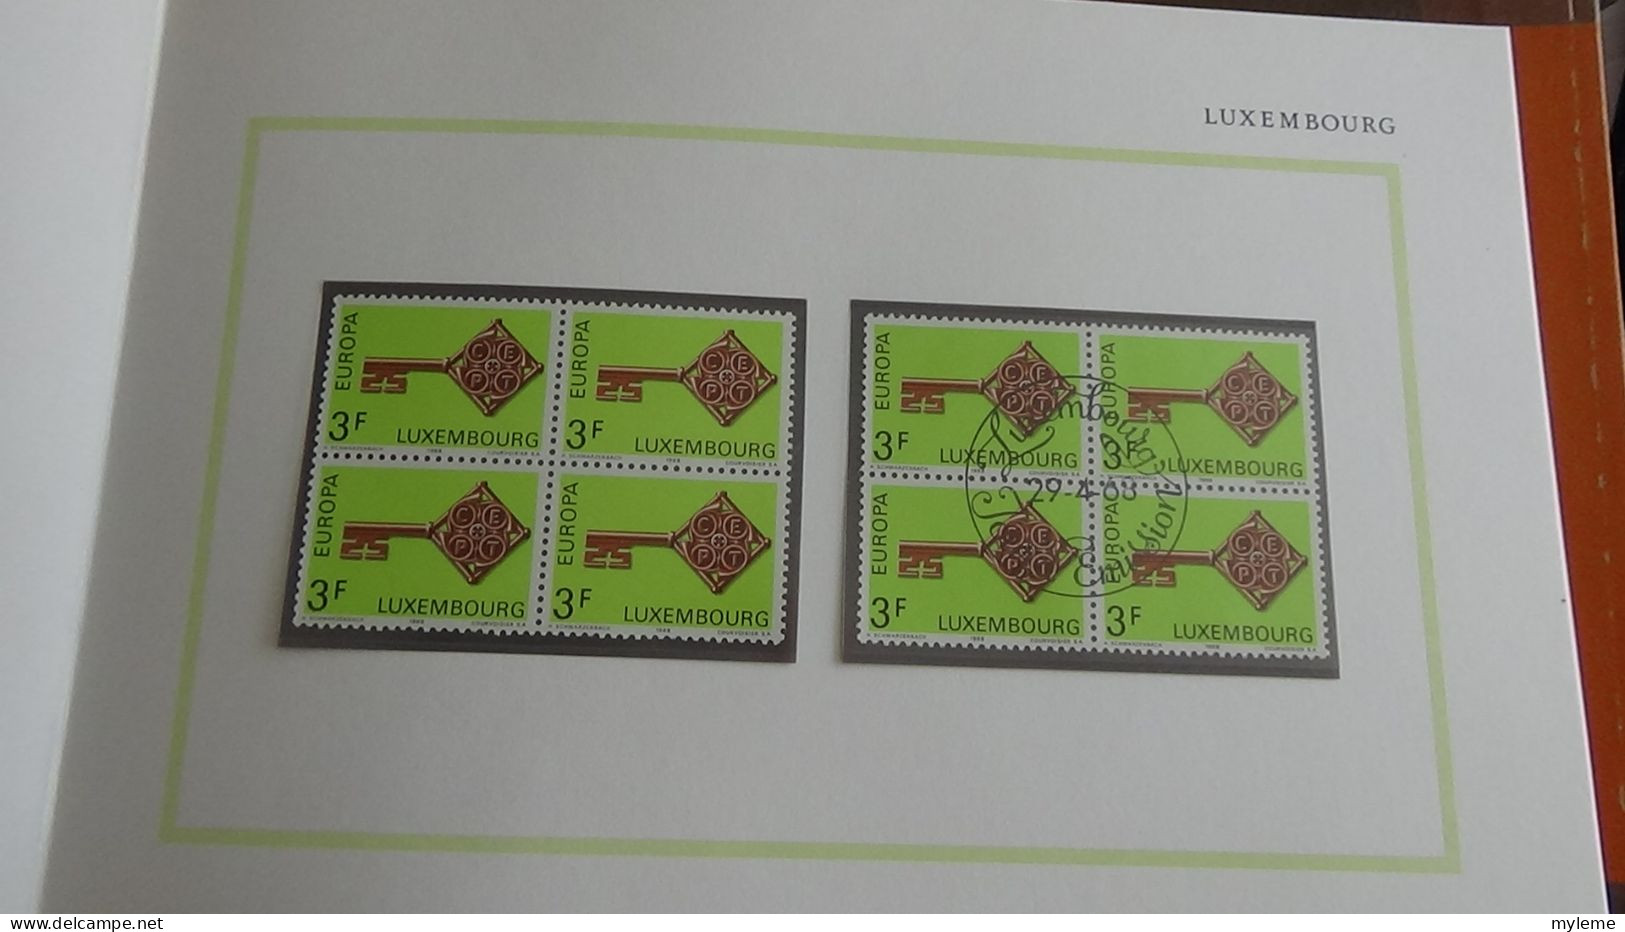 AZ148 Livre de timbres Europa 1968 en blocs de 4 ** + oblitérés. Cote des timbres ** 360 euros A saisir !!